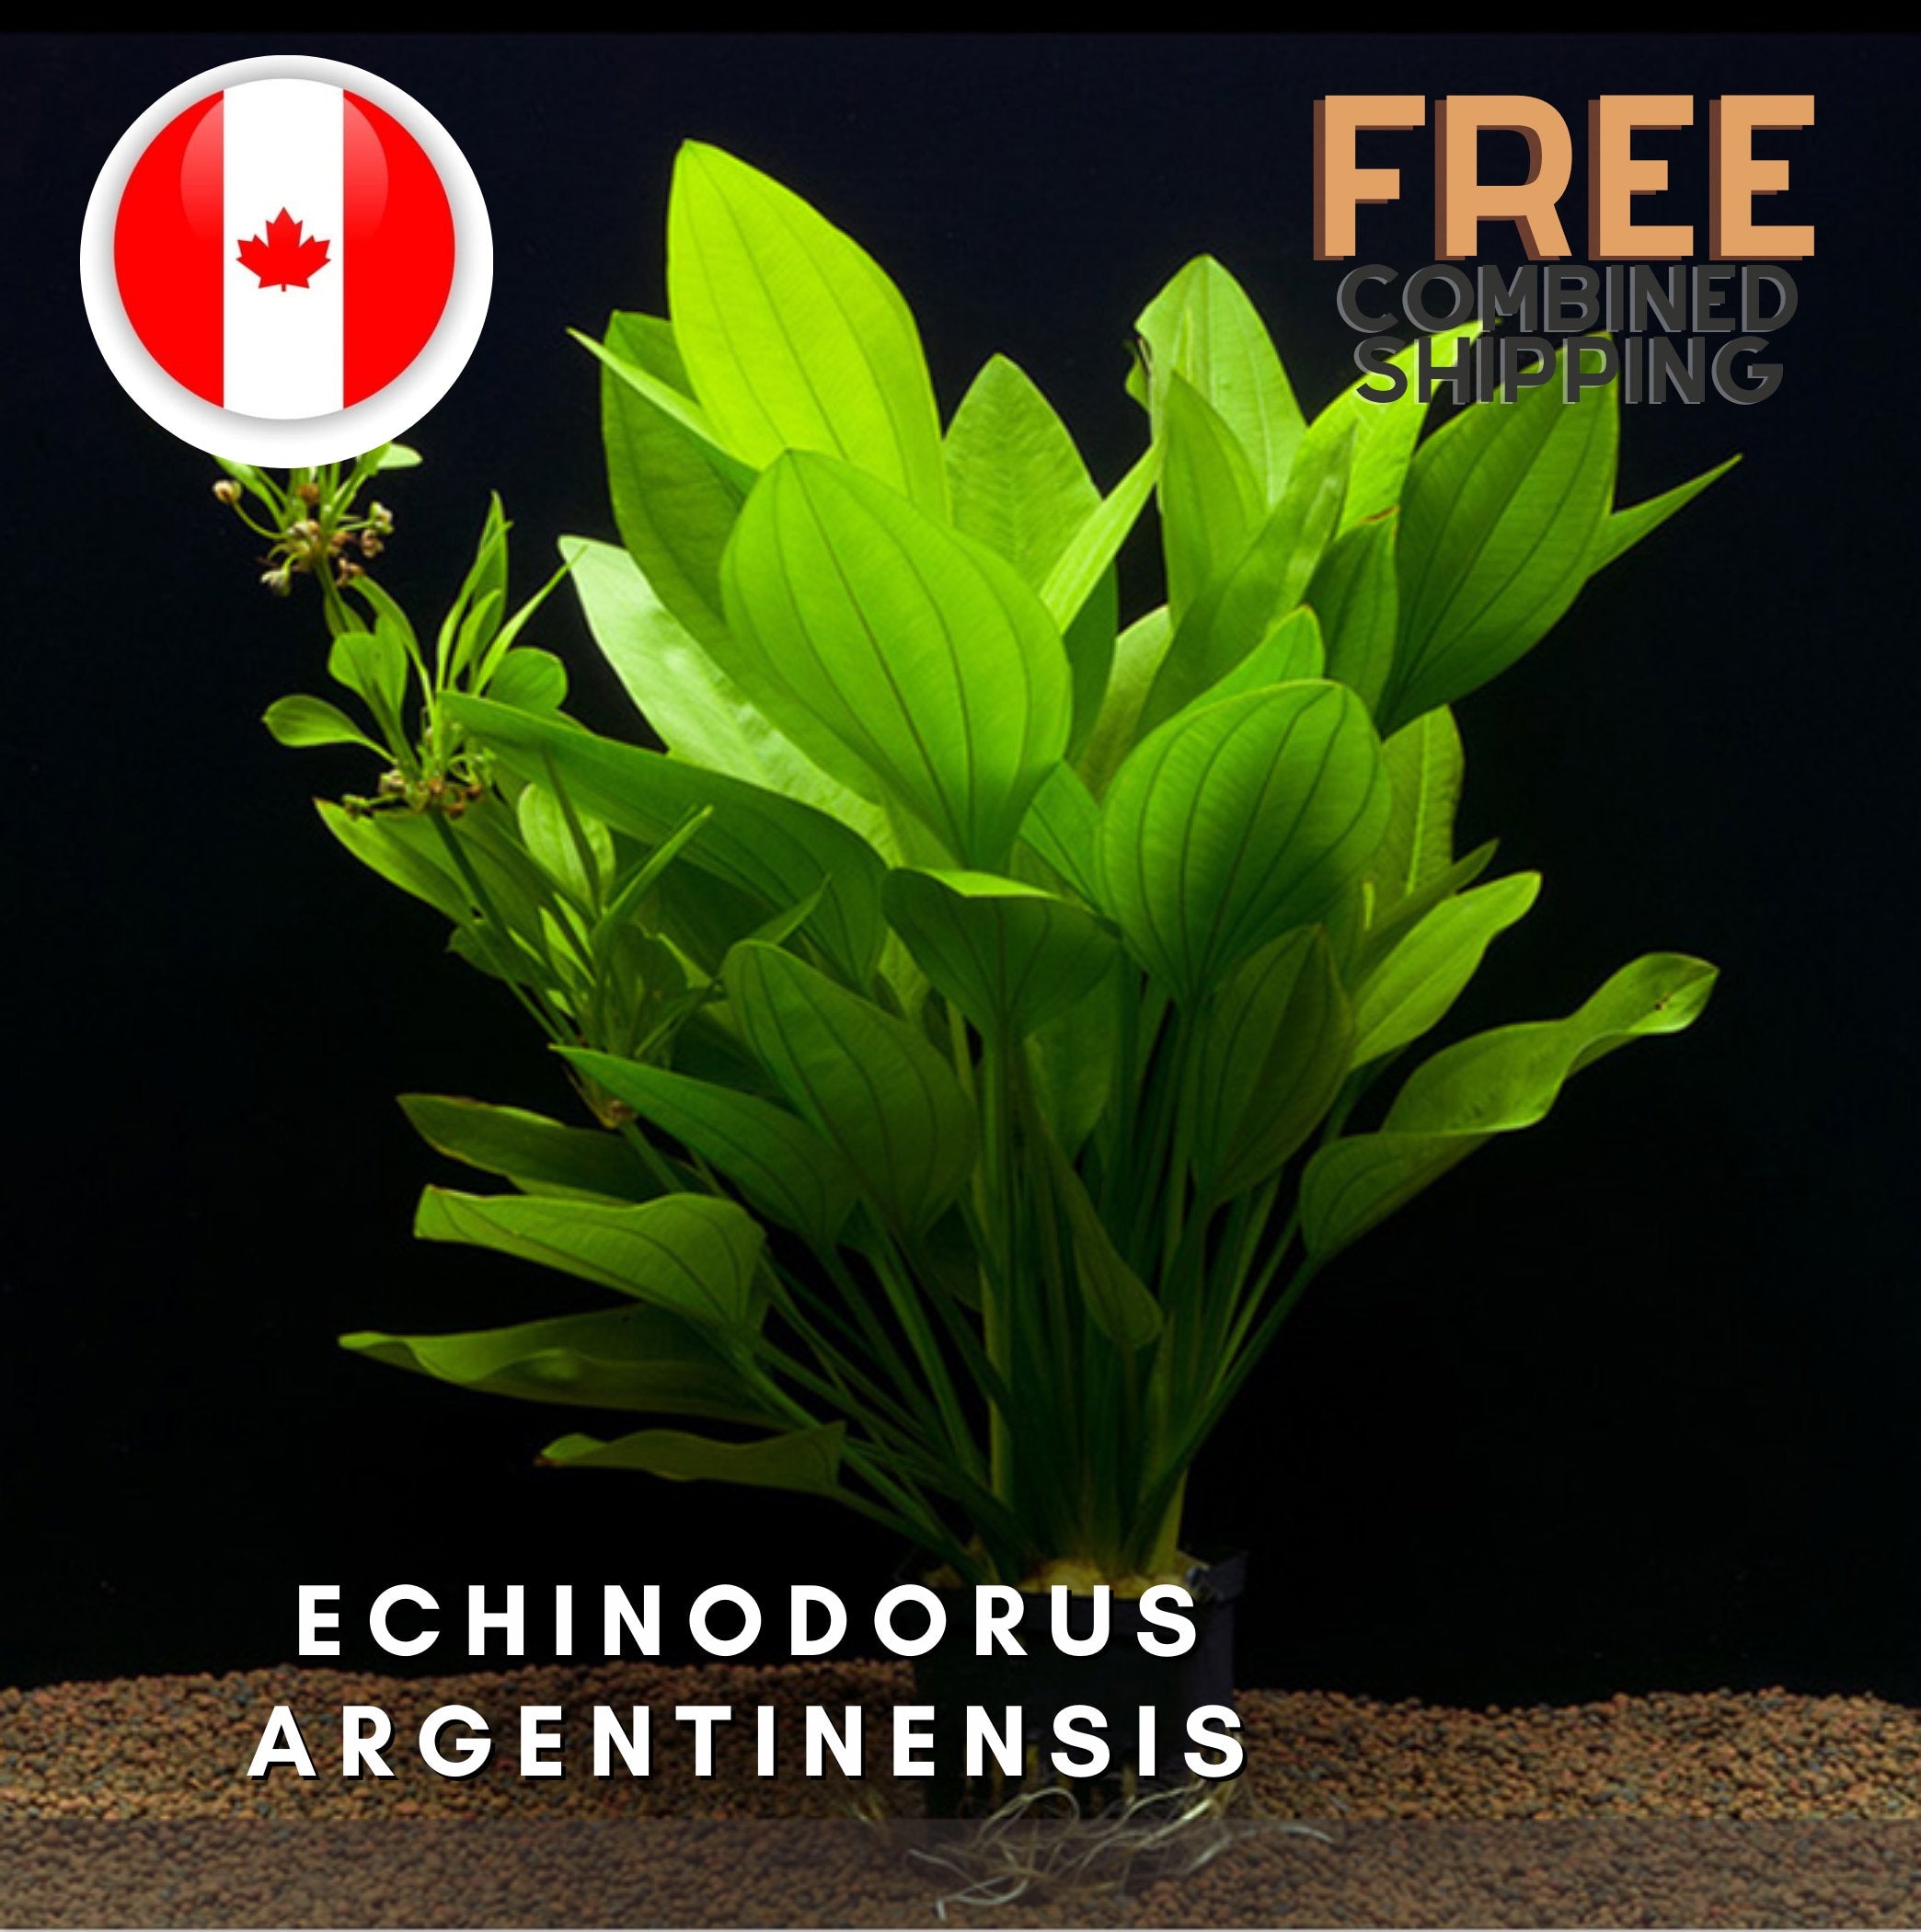 XXL Echinodorus Argentinensis - Aquarium Plants - Aquatic Plants - Canada Seller - Combined Shipping